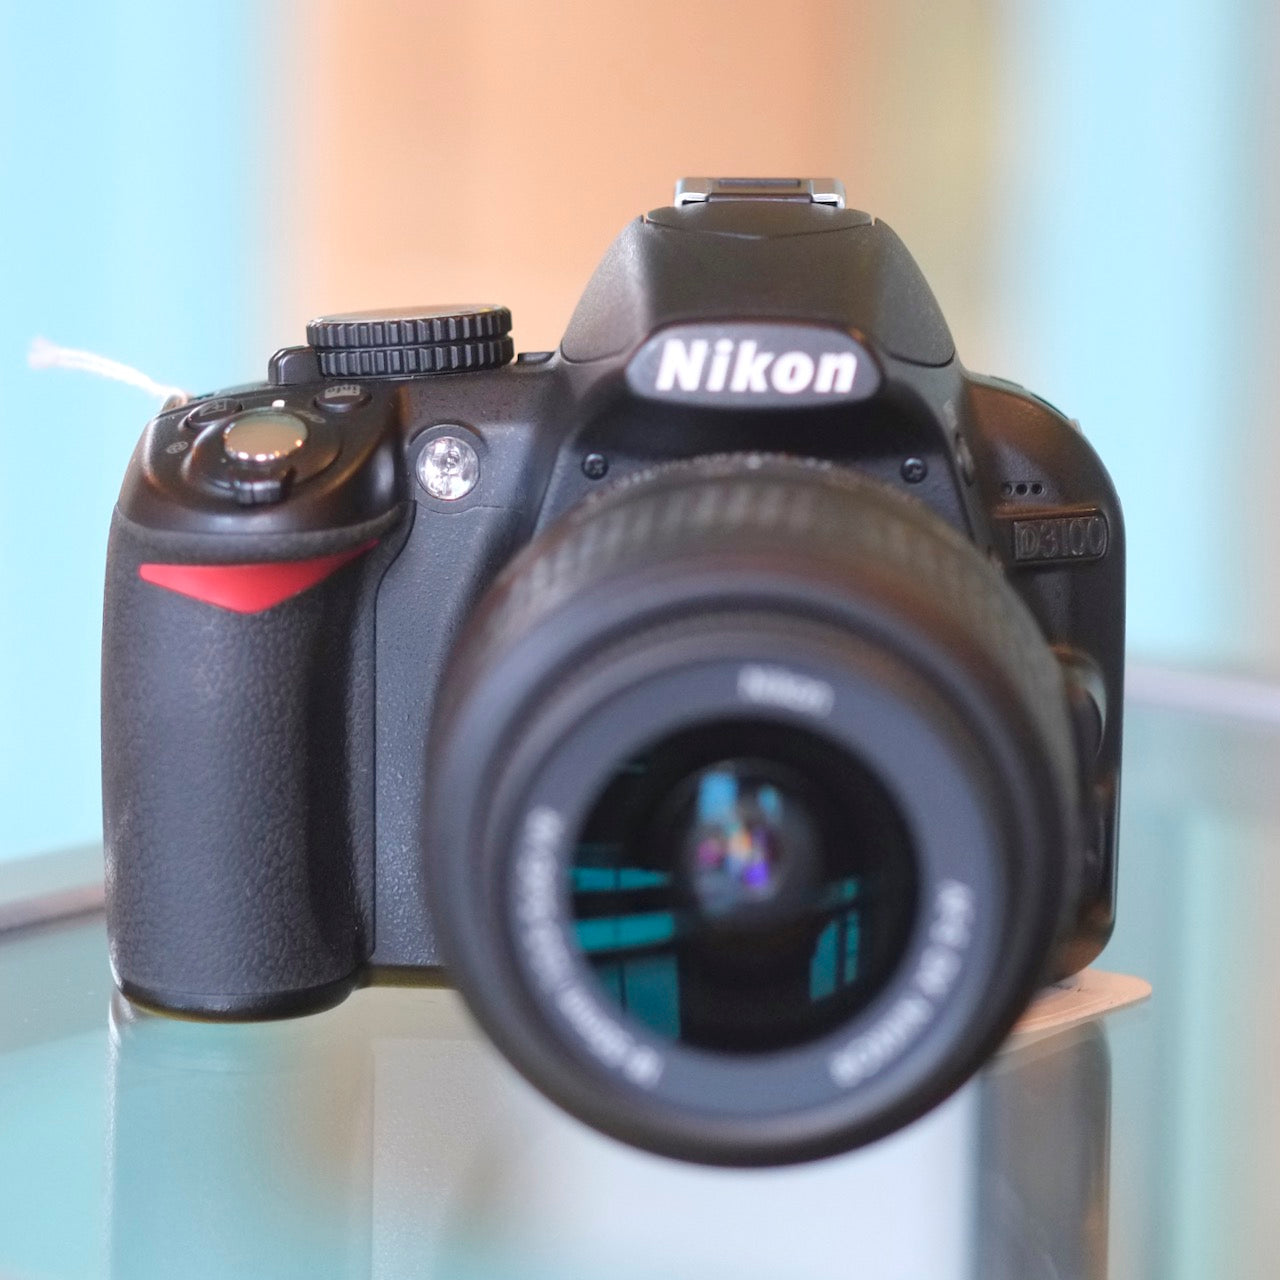 Nikon D3100 with Nikon 18-55mm f3.5-5.6G VR Nikkor